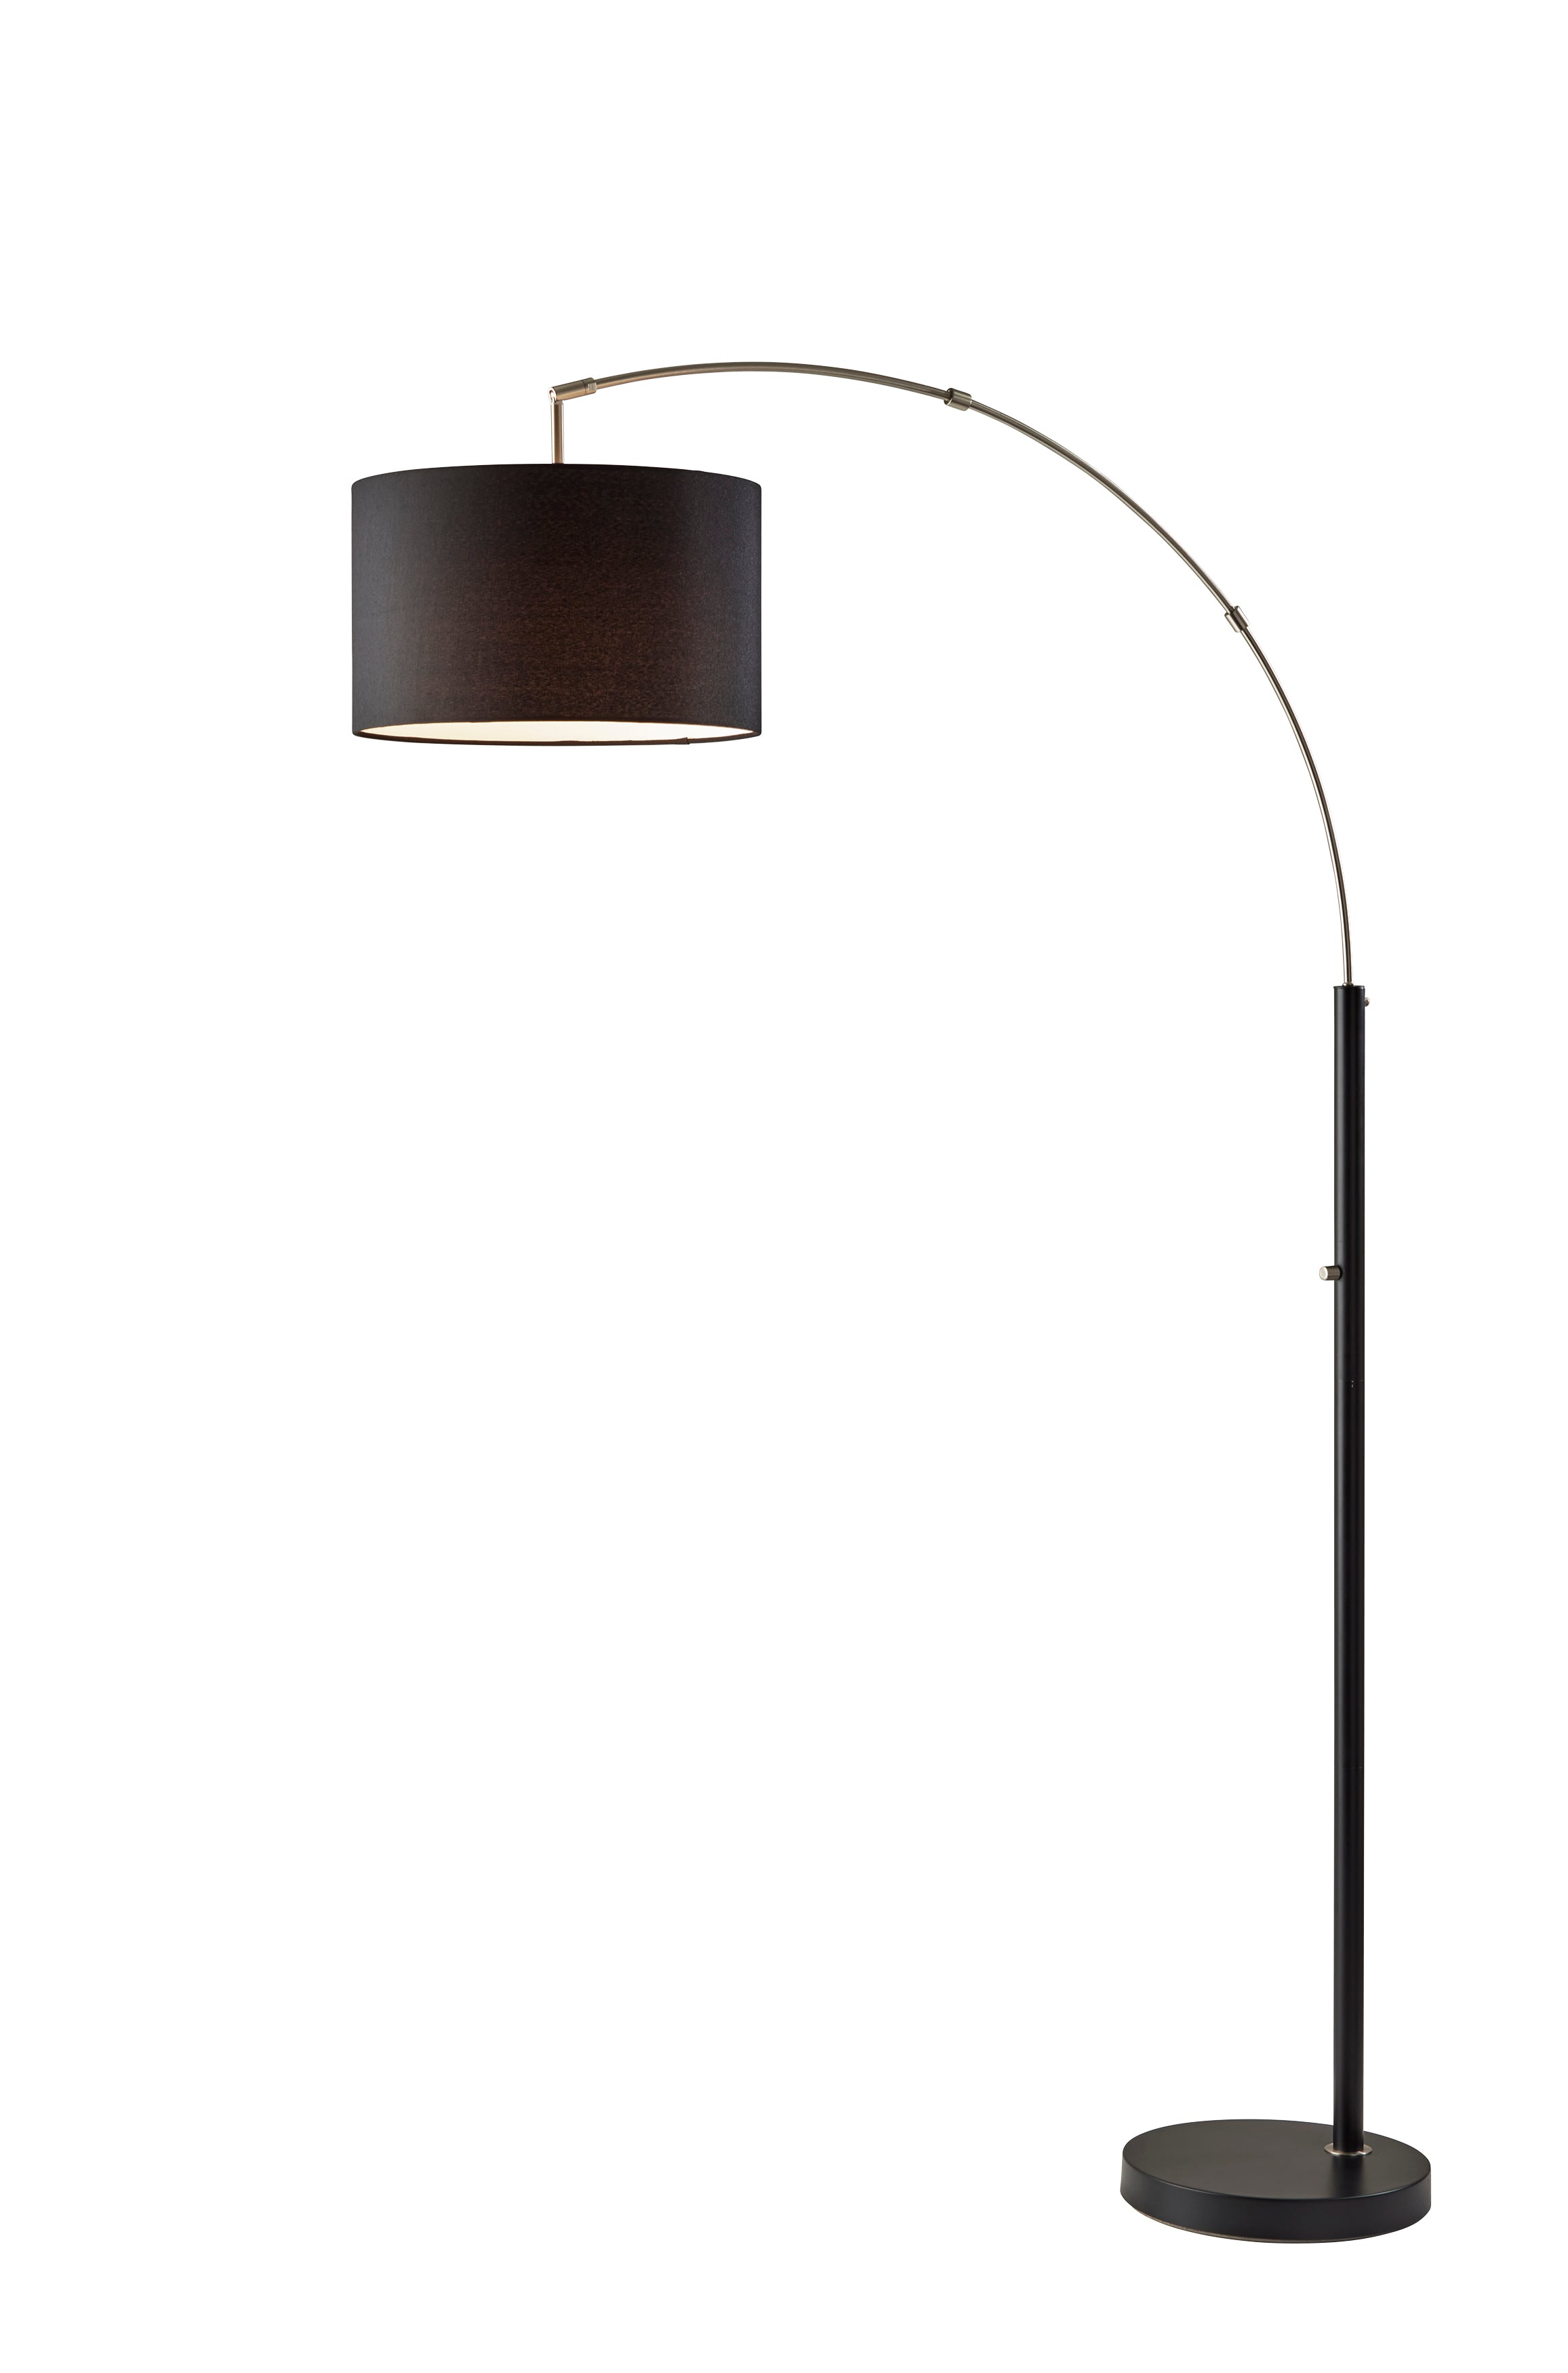 PRESTON Floor lamp Black, Stainless steel - 4012-01 | ADESSO